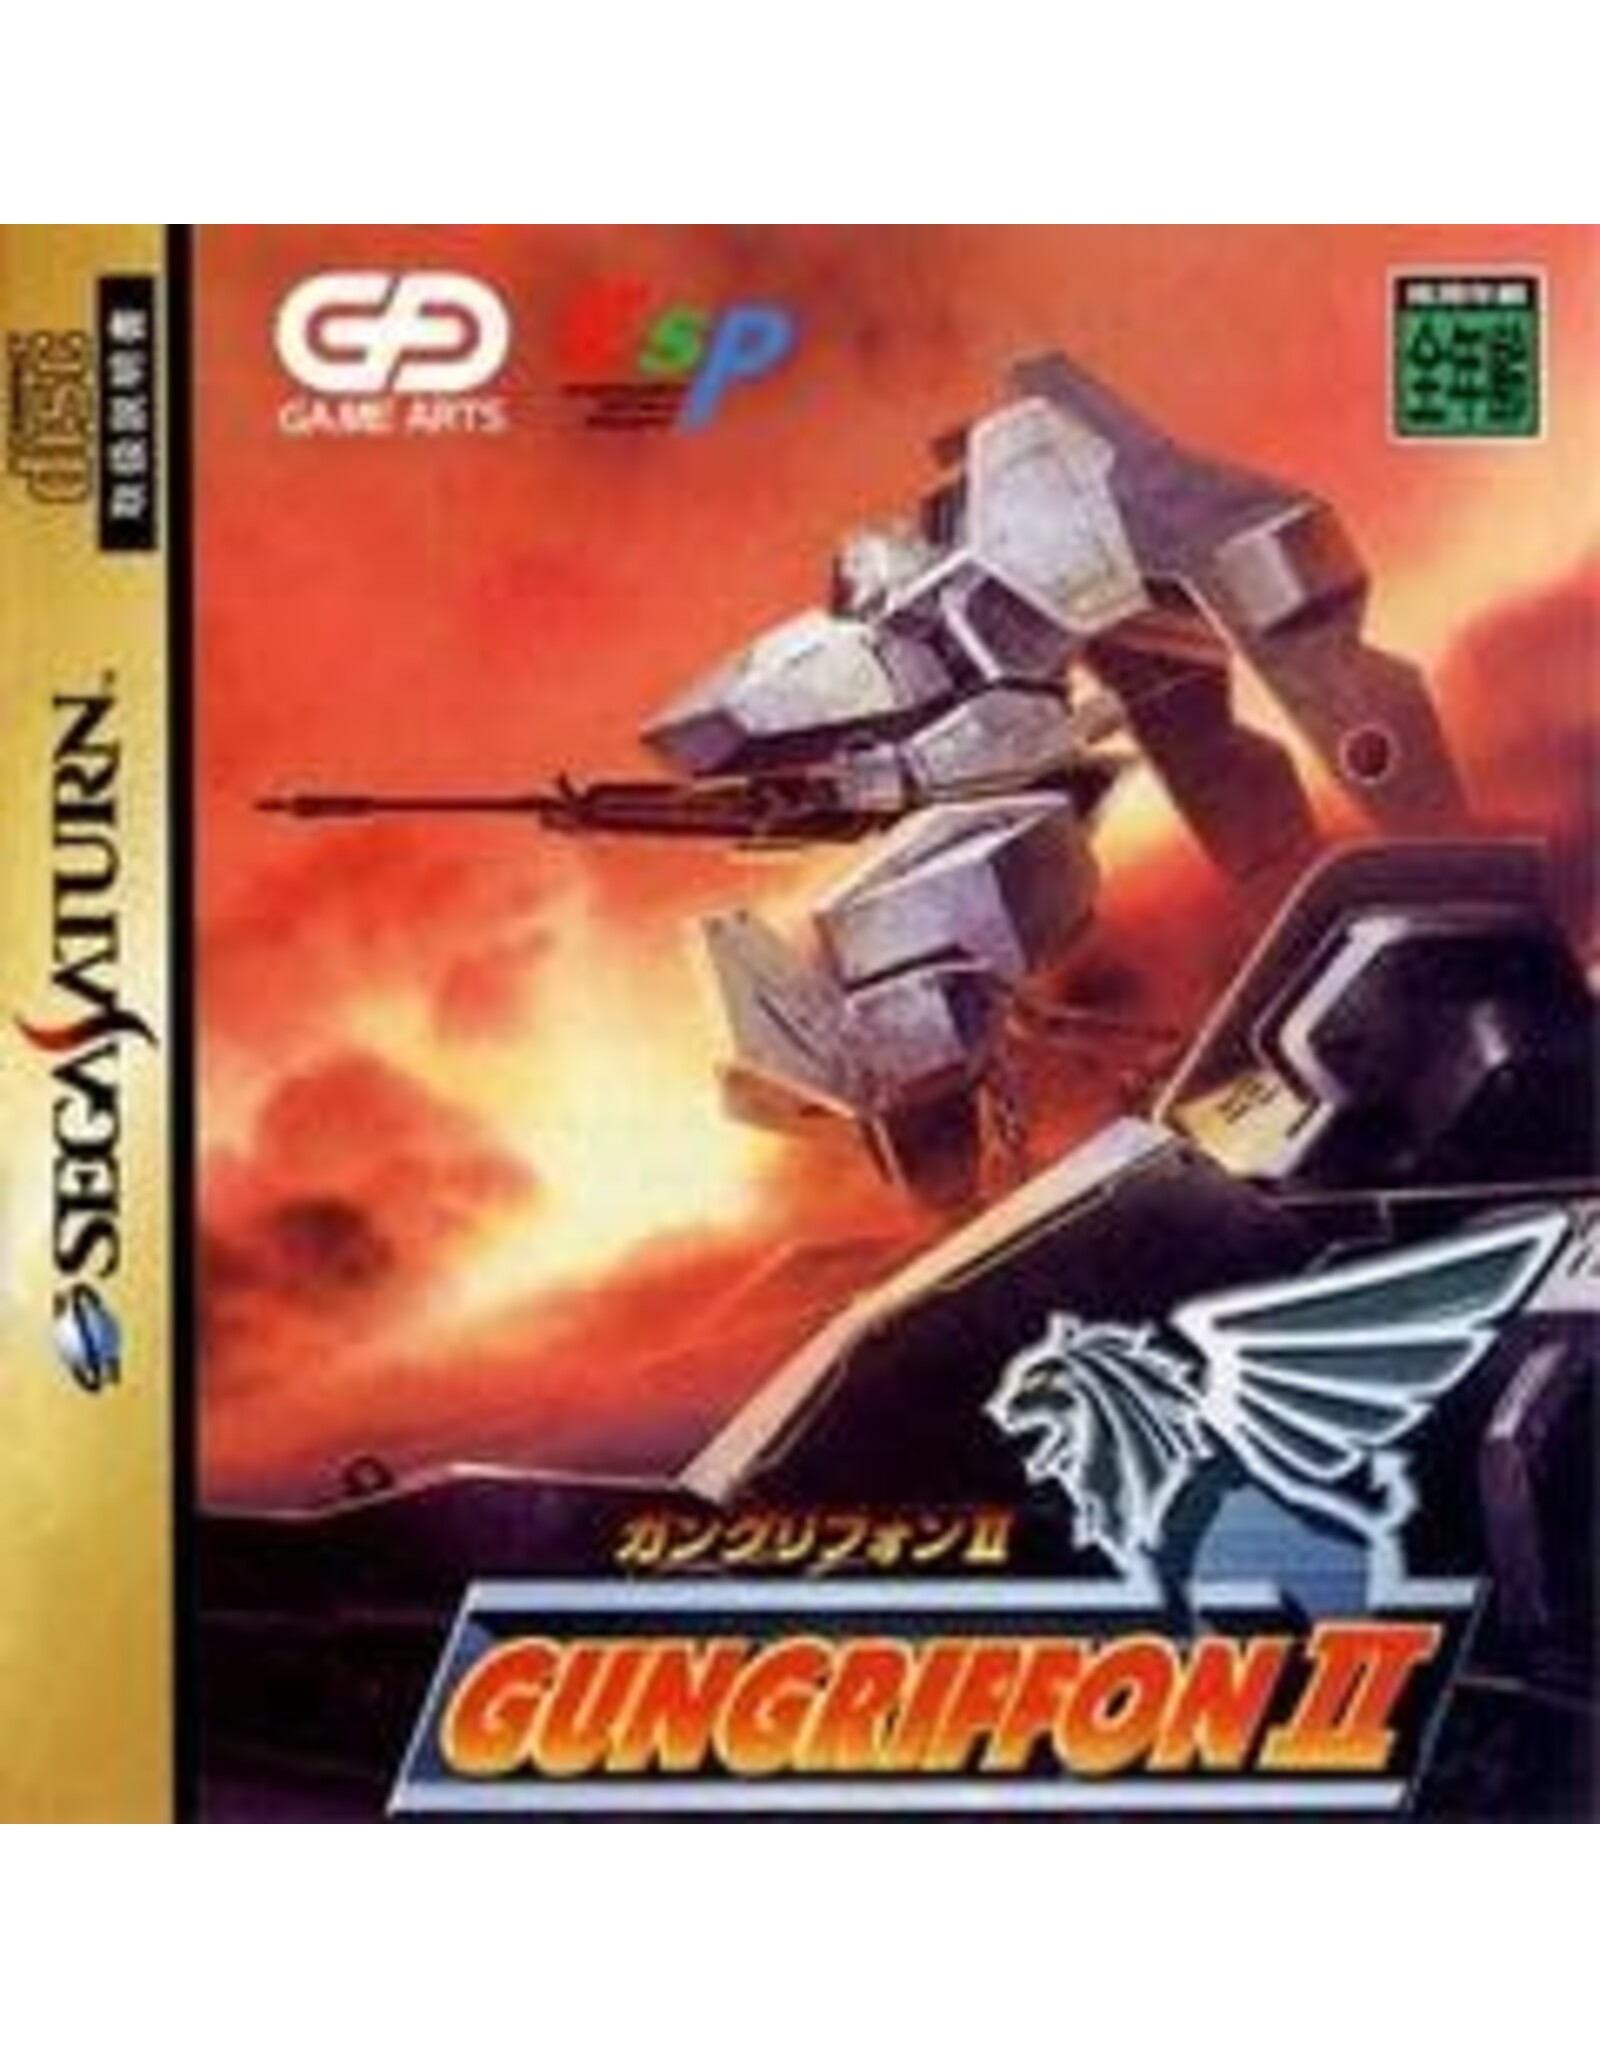 Sega Saturn Gungriffon II - JP Import (Used)